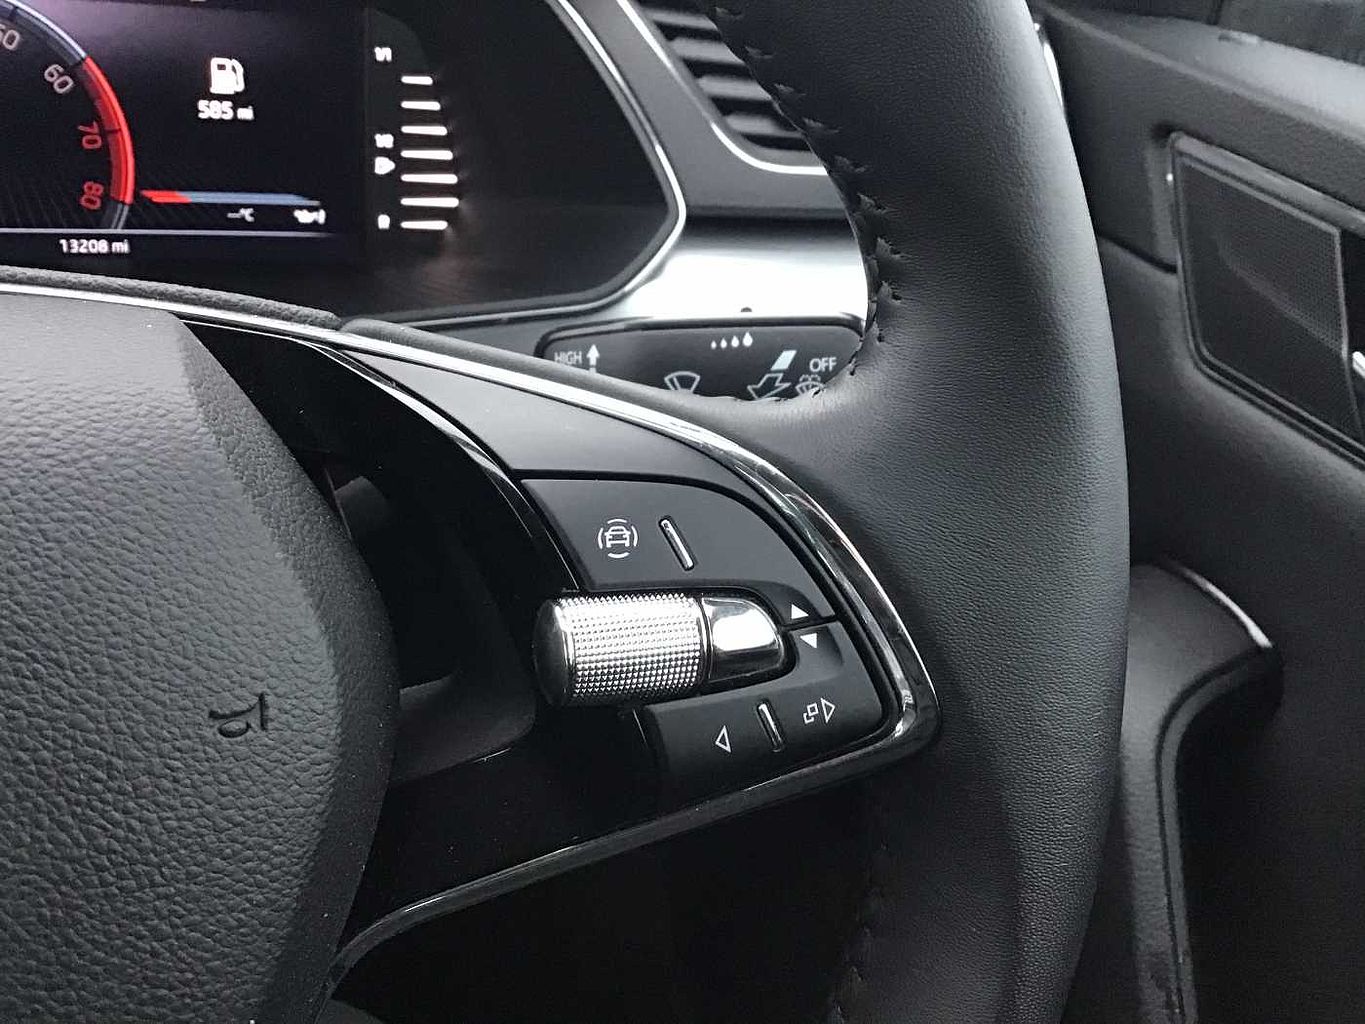 SKODA Superb 1.5 TSI (150ps) SE Technology Auto/DSG Hatchback